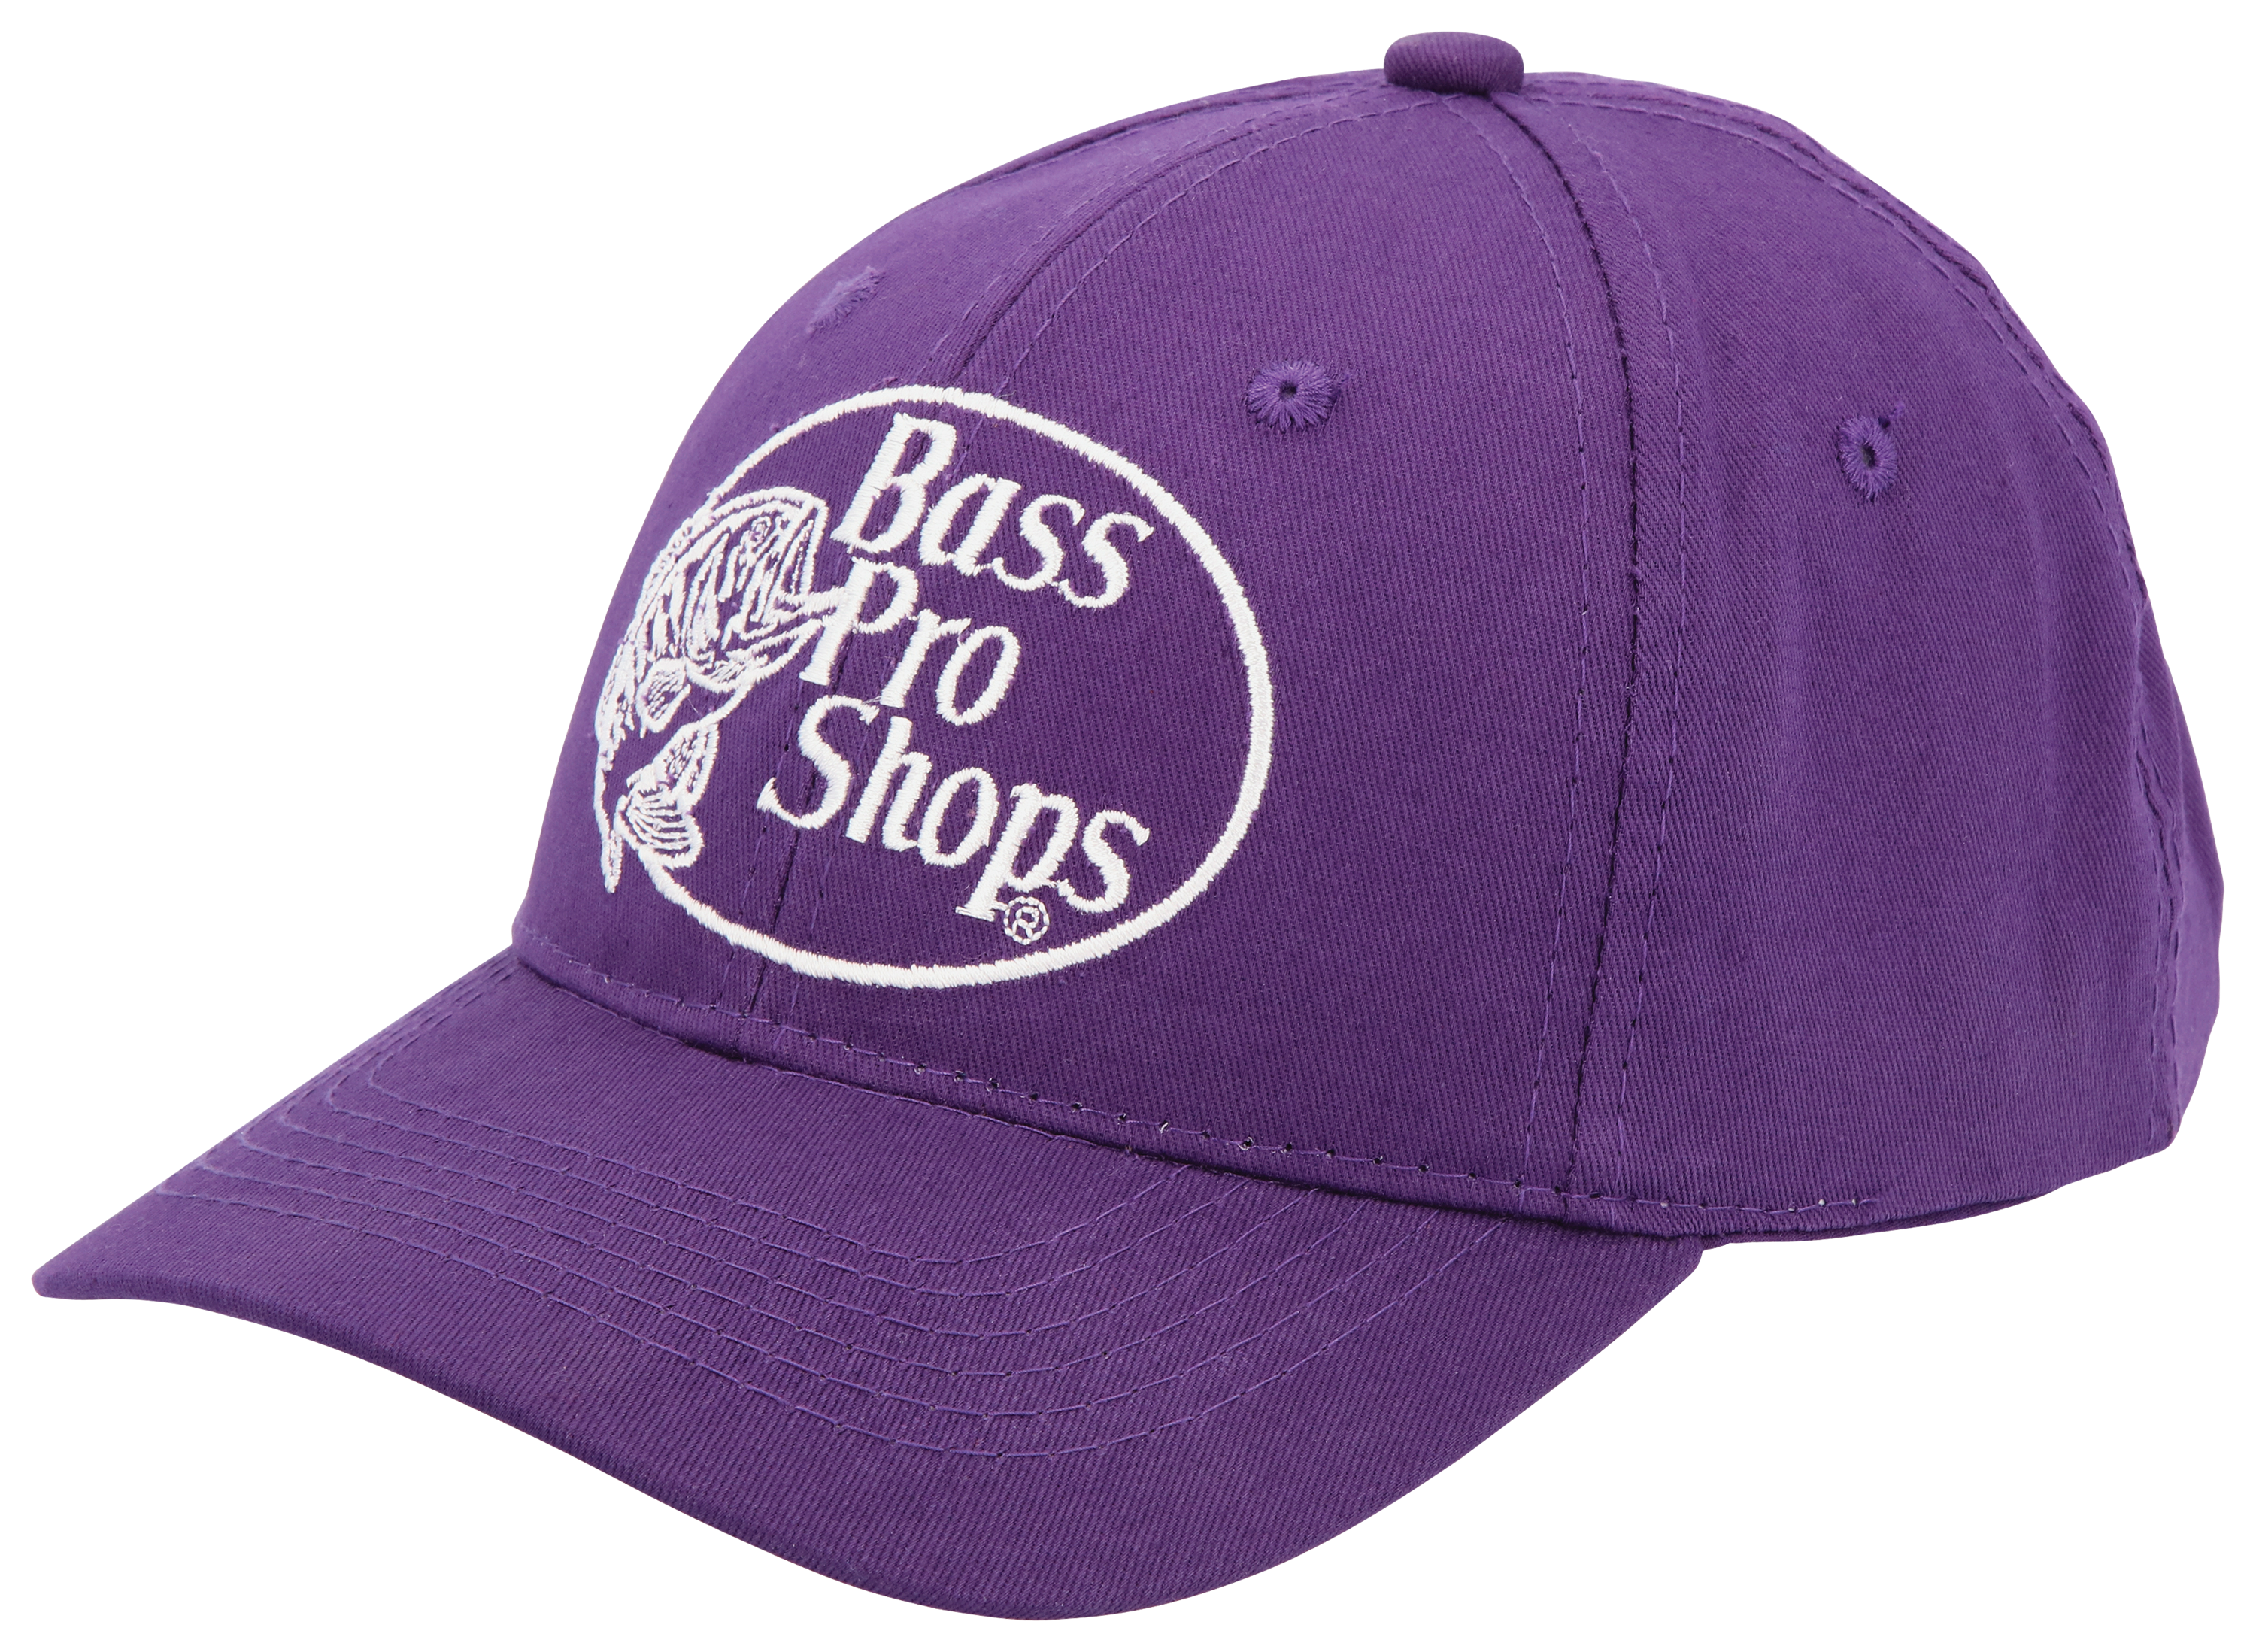 Bass Pro Shop Green Classic Logo Cotton Twill Trucker Hat Adult OSFA